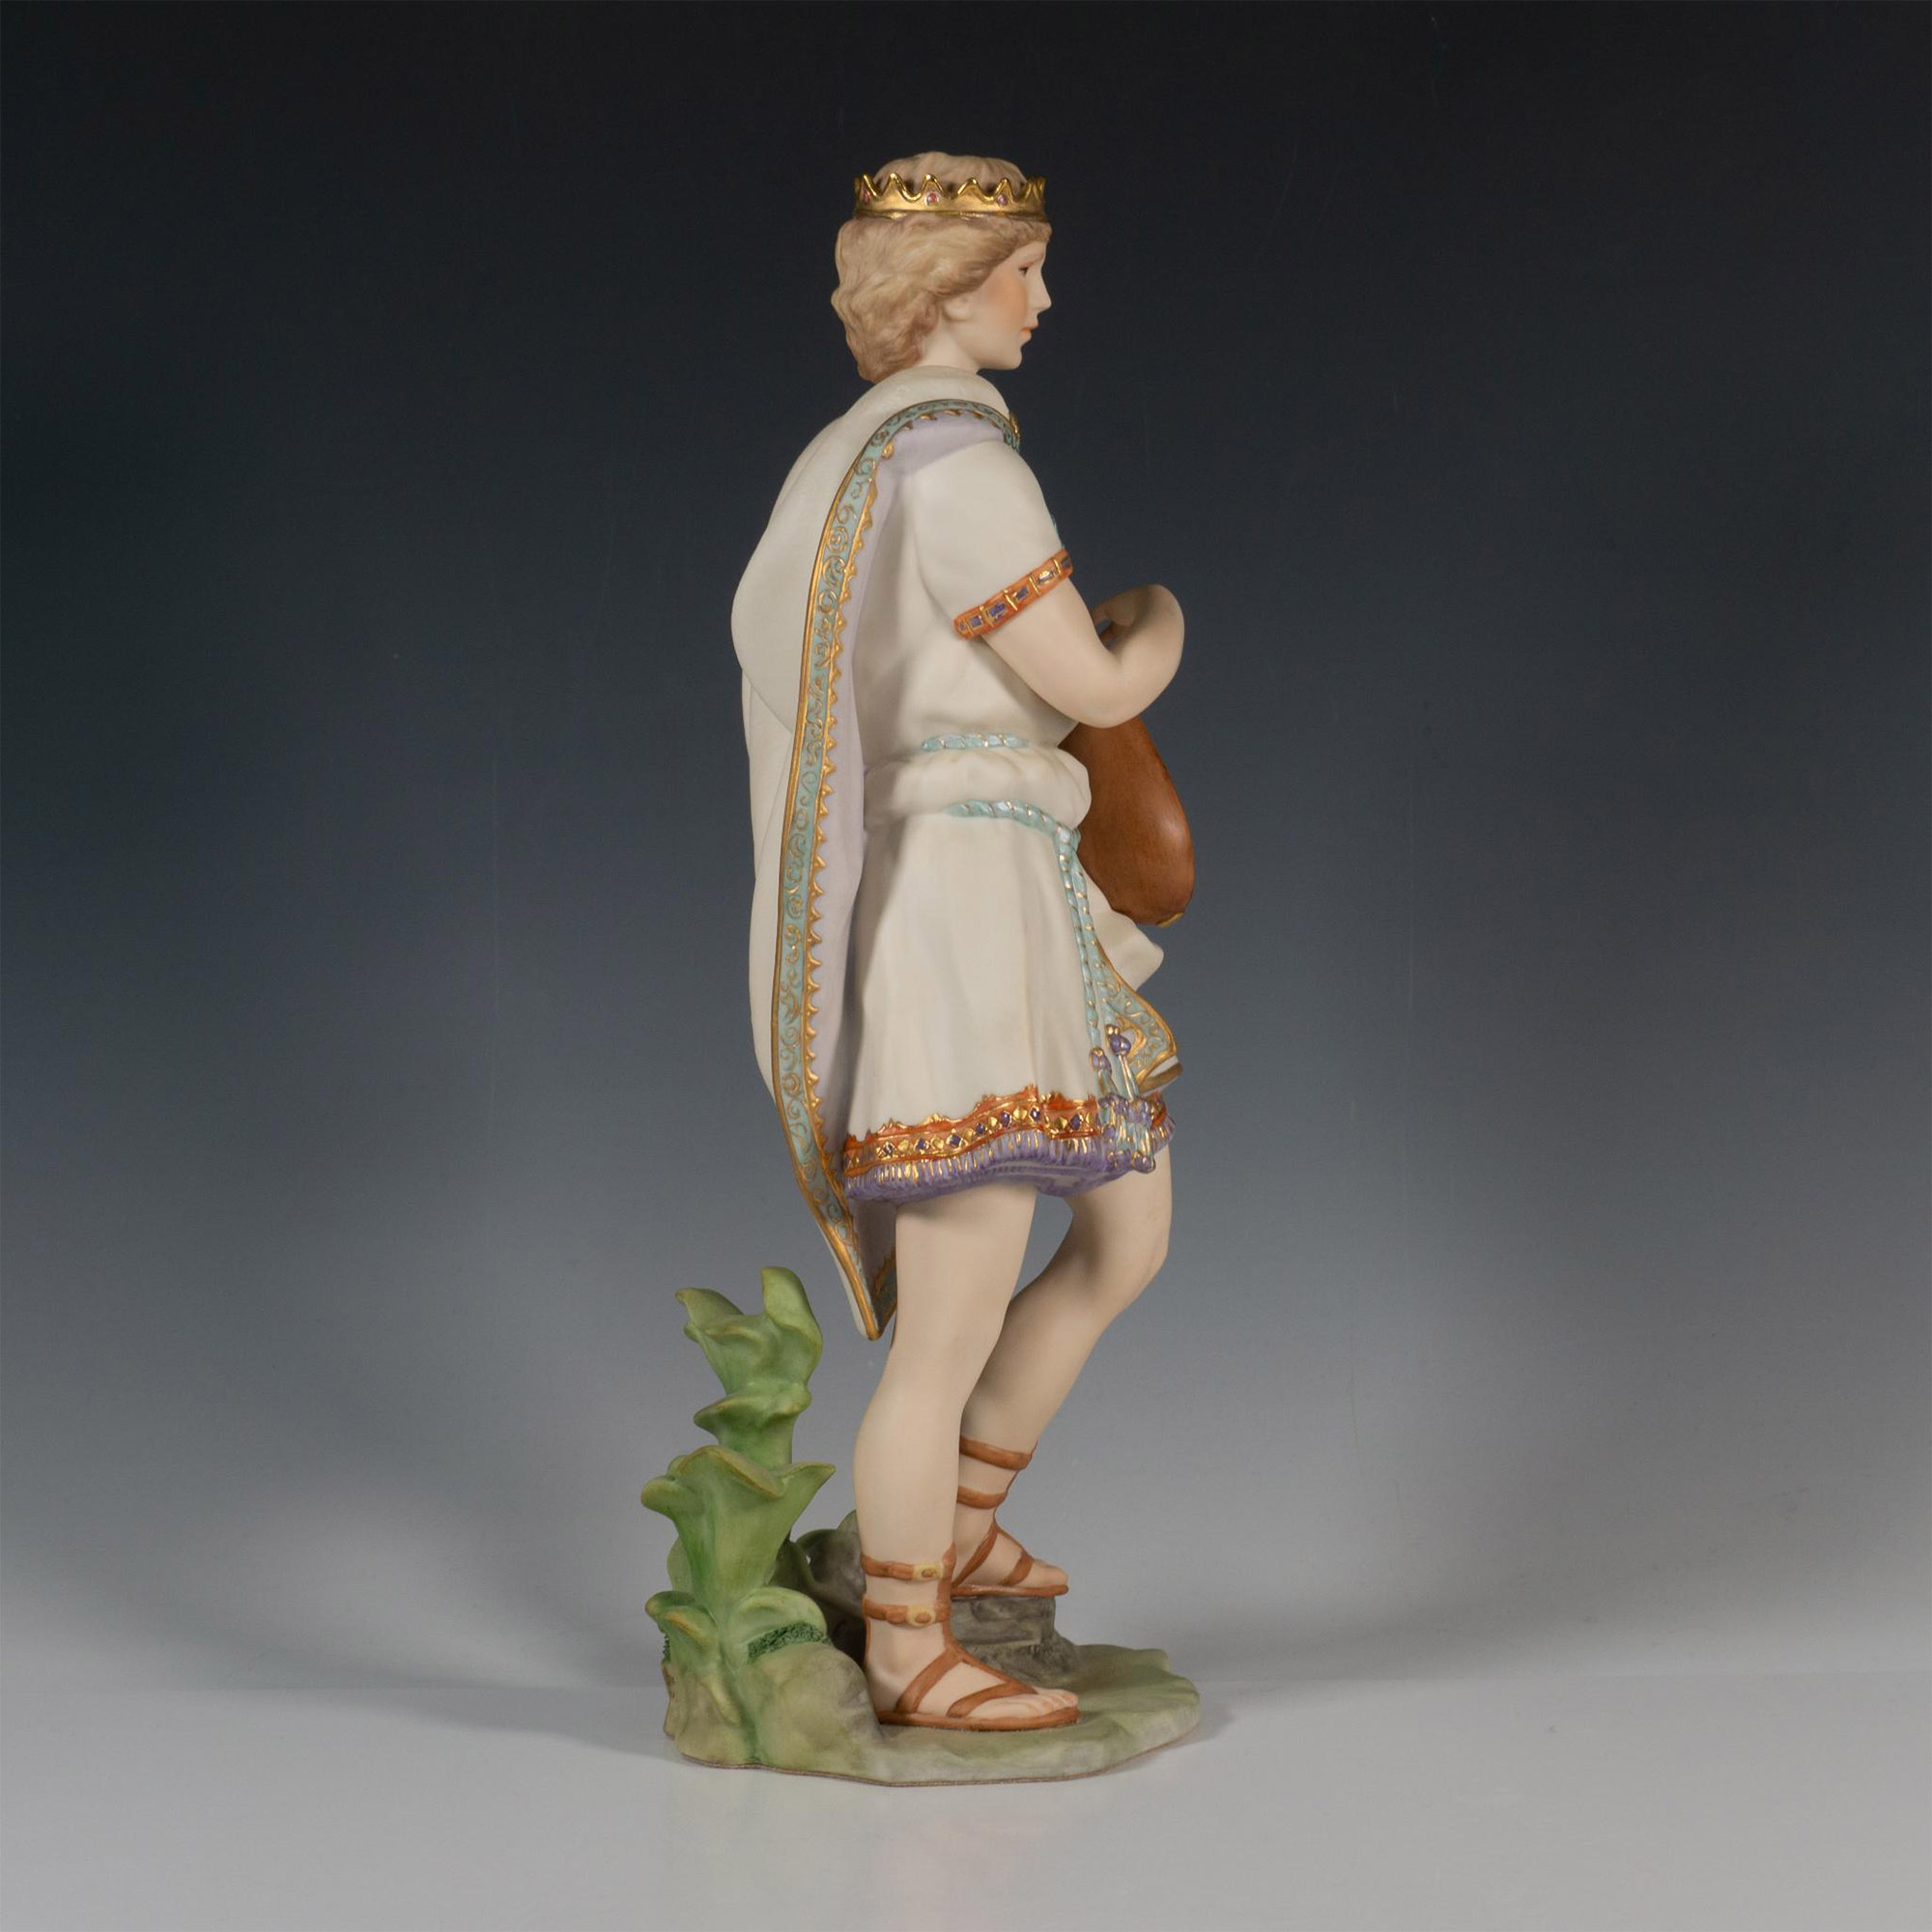 Cybis Limited Edition Figurine, King David - Image 3 of 5